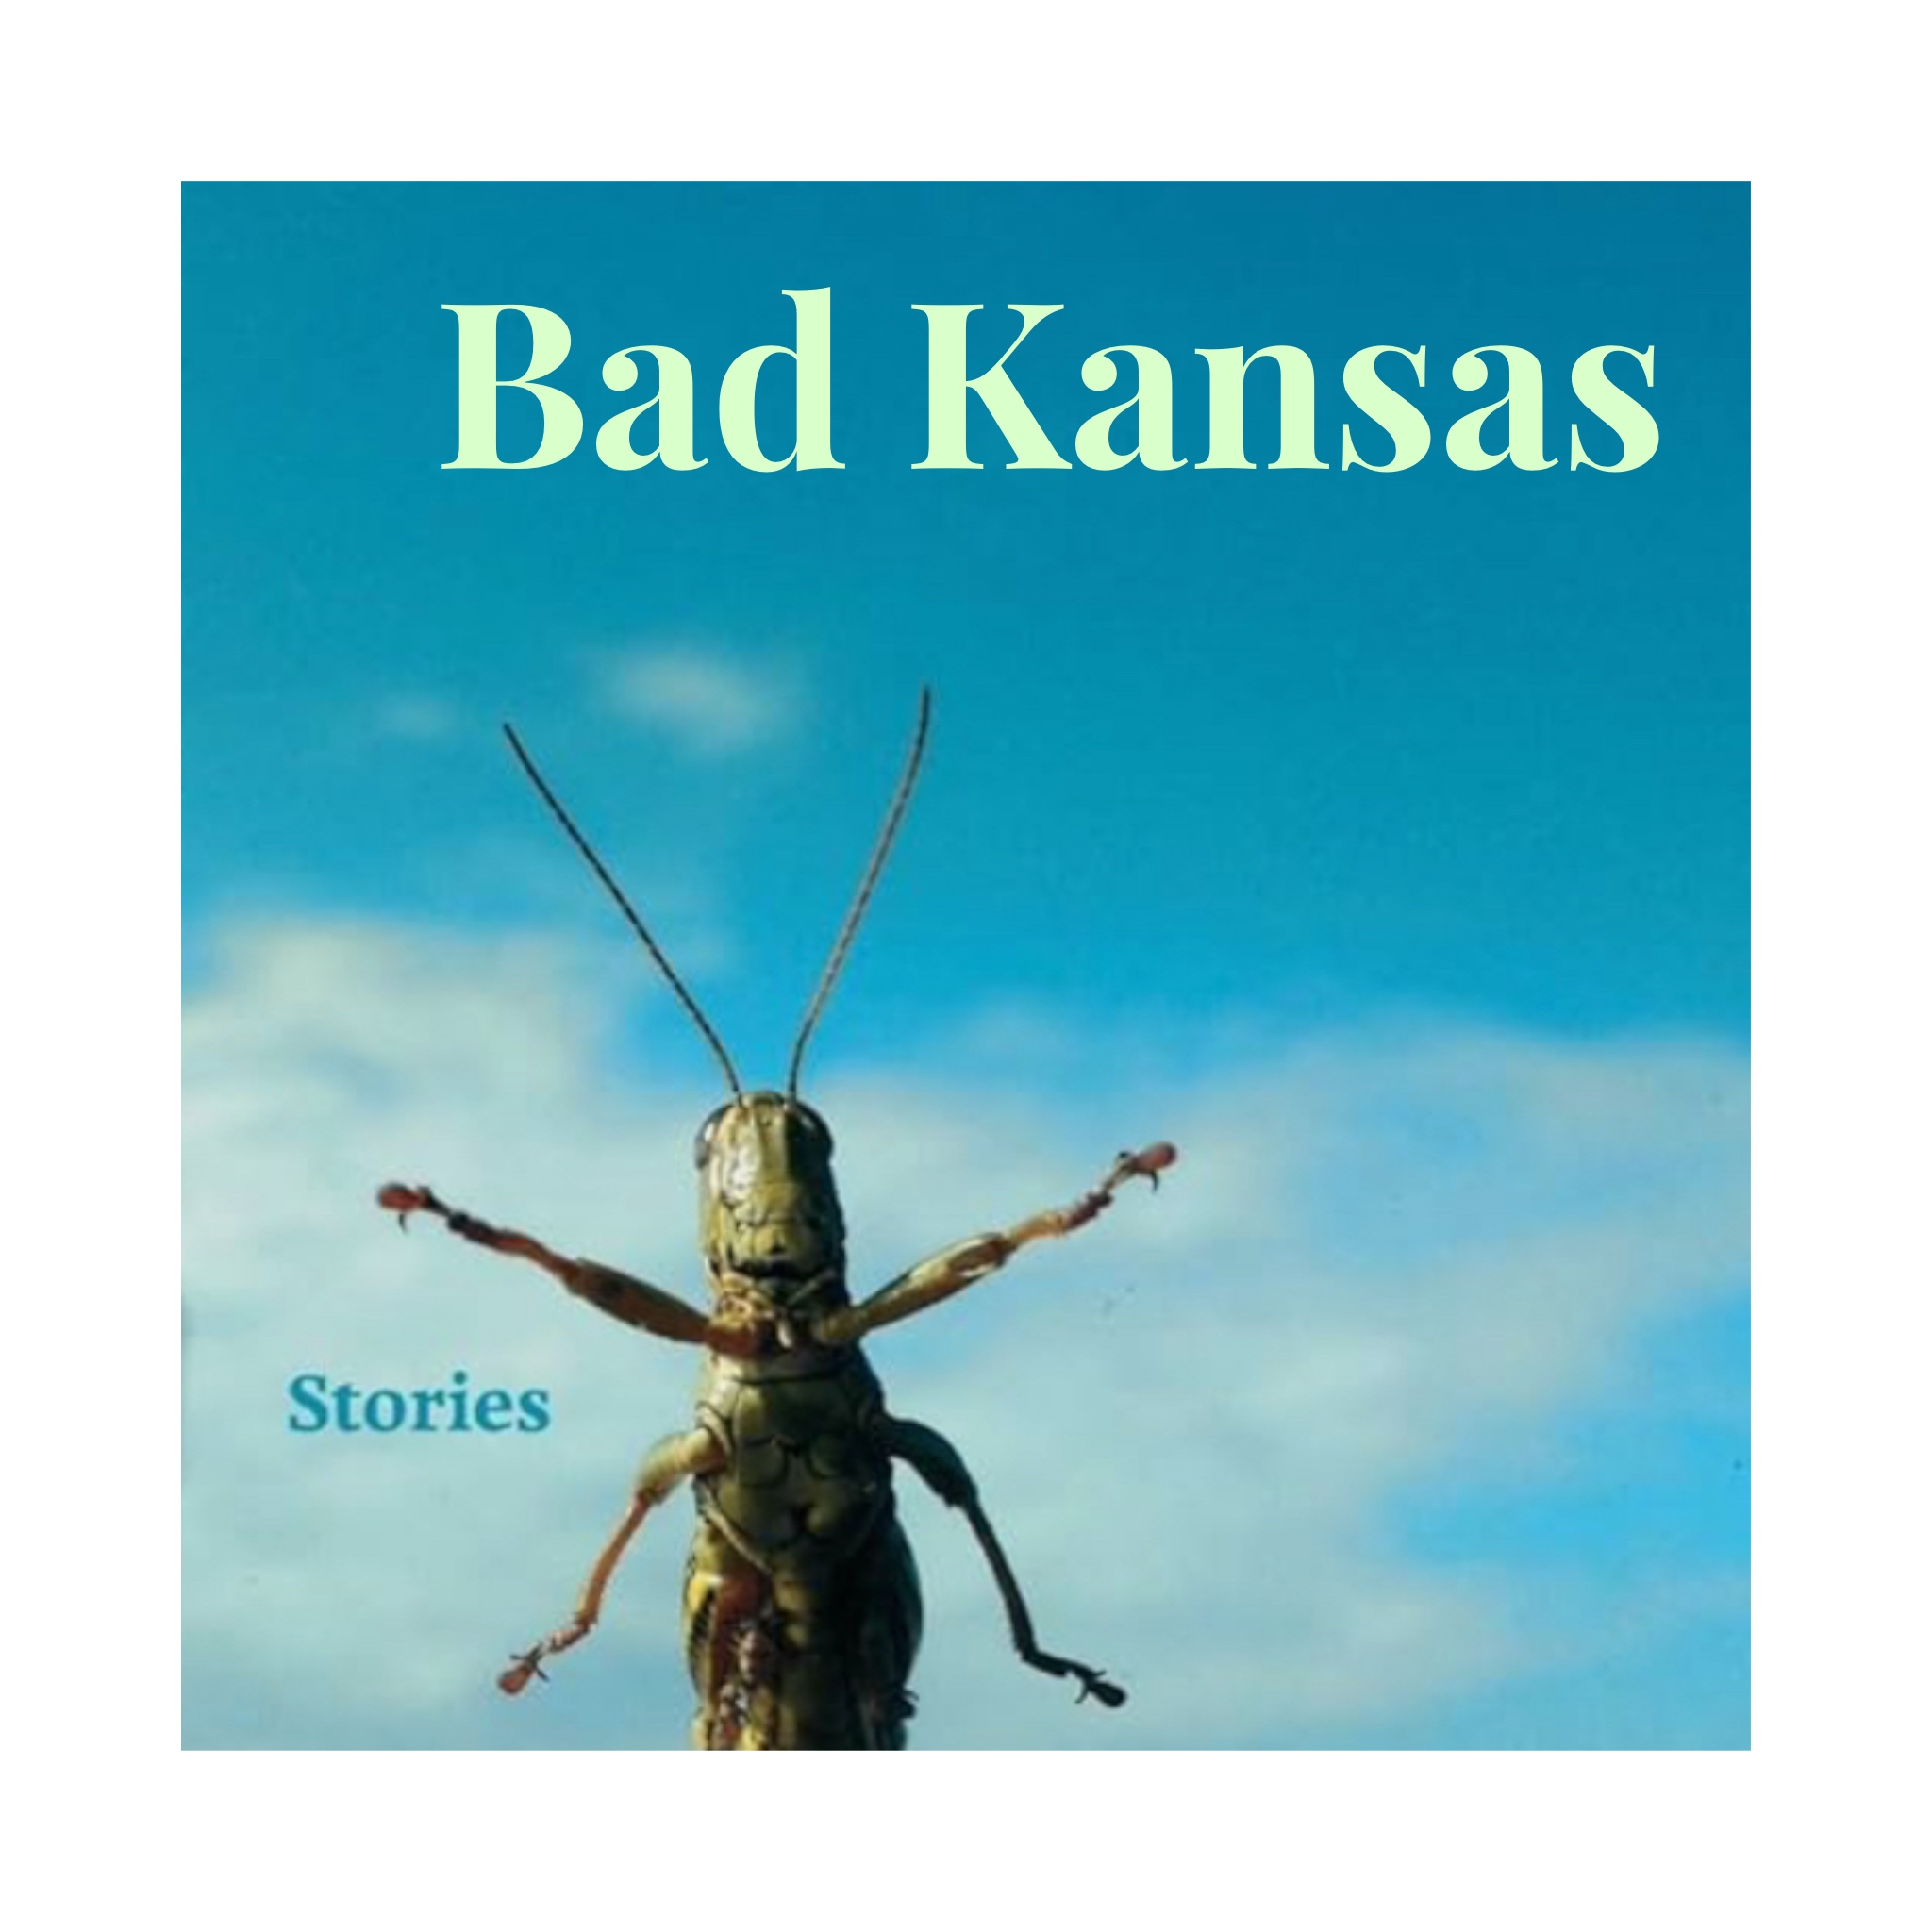 Cover of Bad Kansas: Stories; blue sky, clouds, grasshopper bottom left